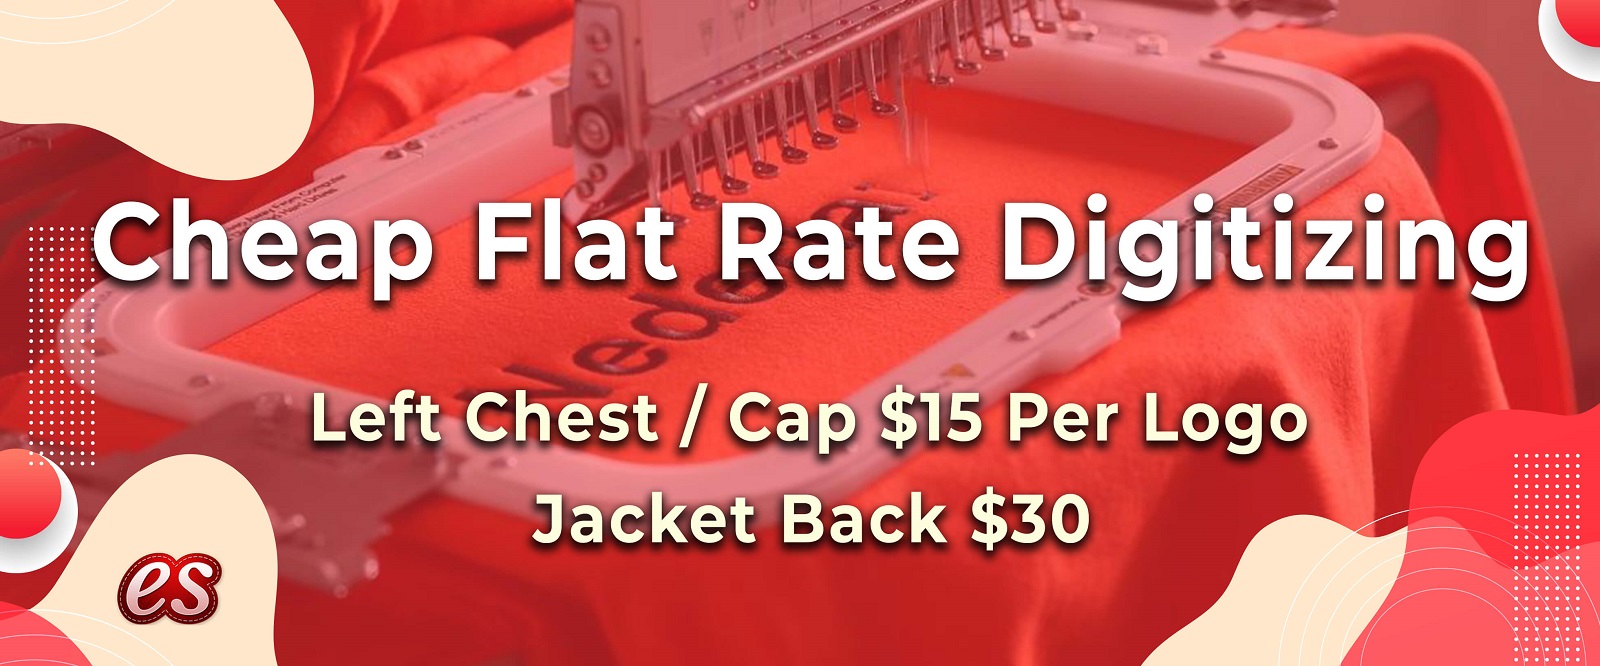 Cheap Flat Rate